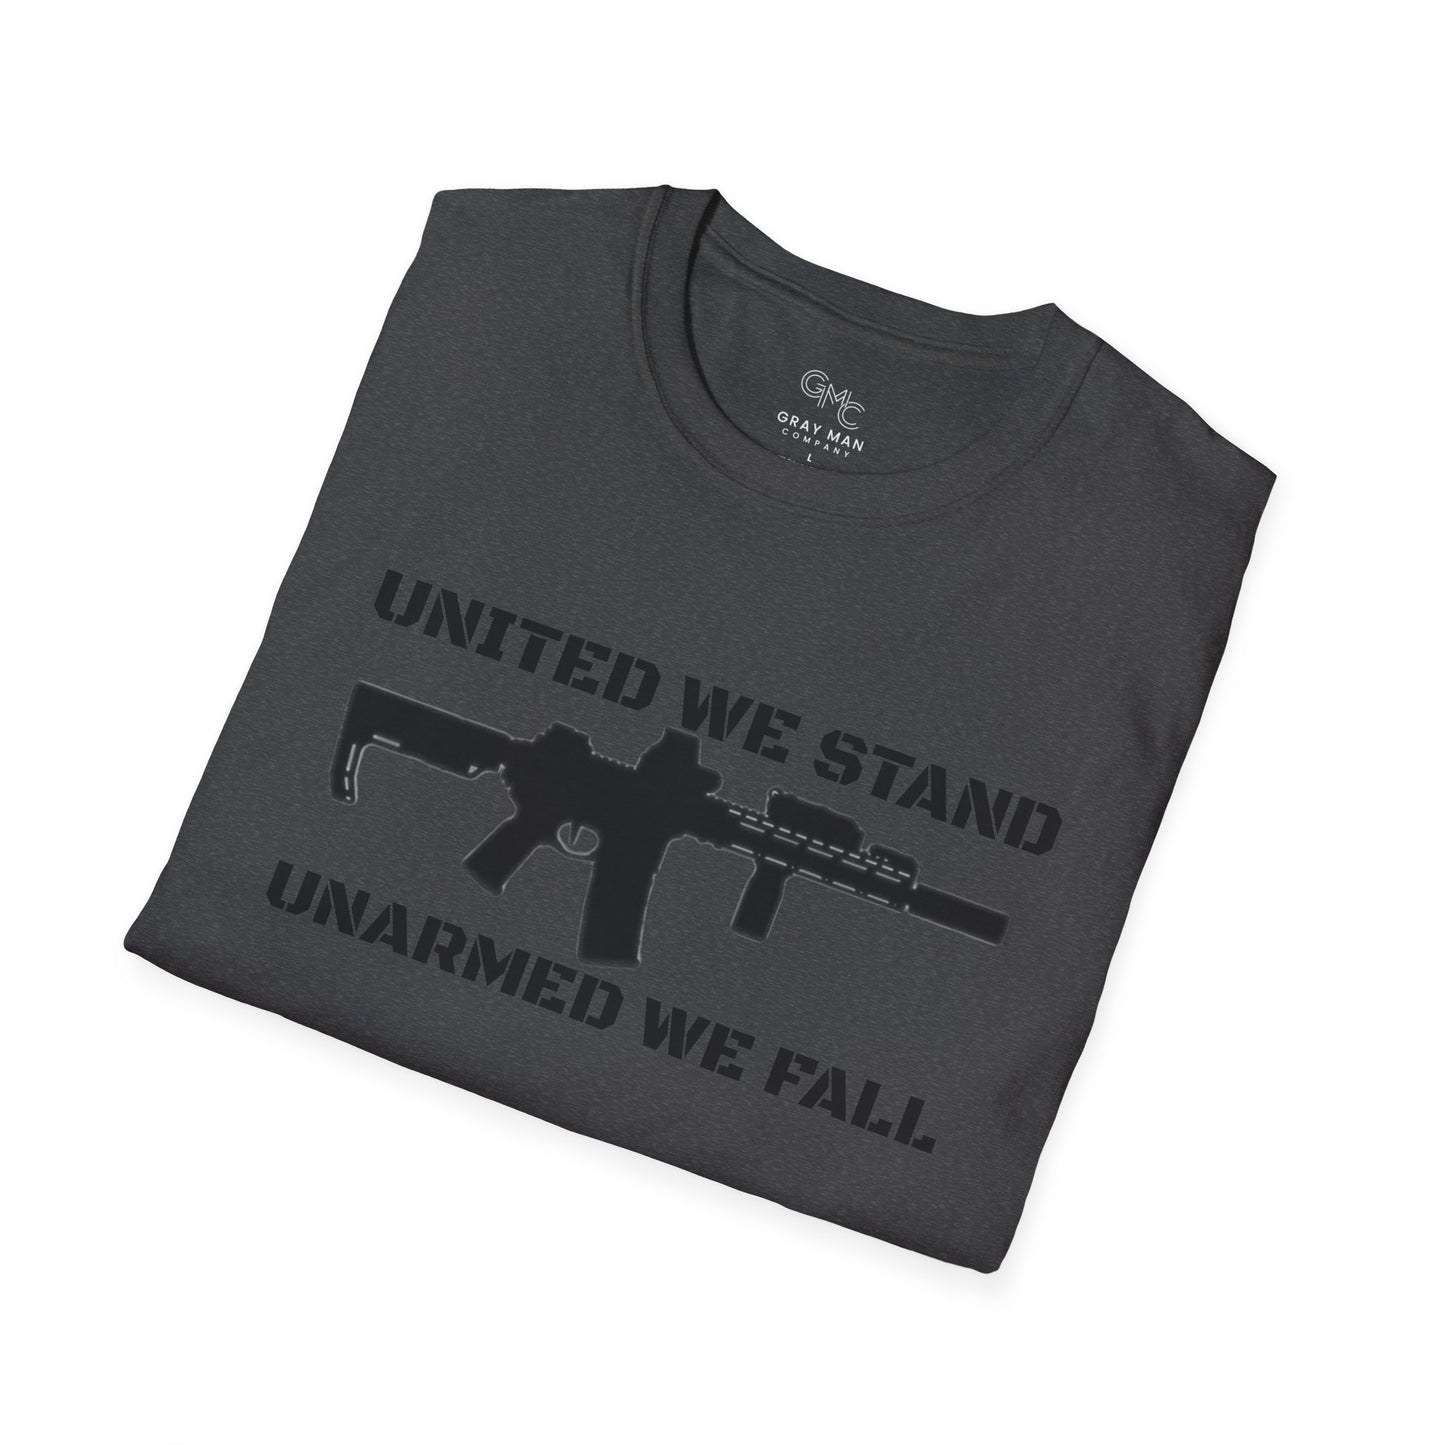 EDC Logo T-Shirt - UNITED WE STAND, UNARMED WE FALL